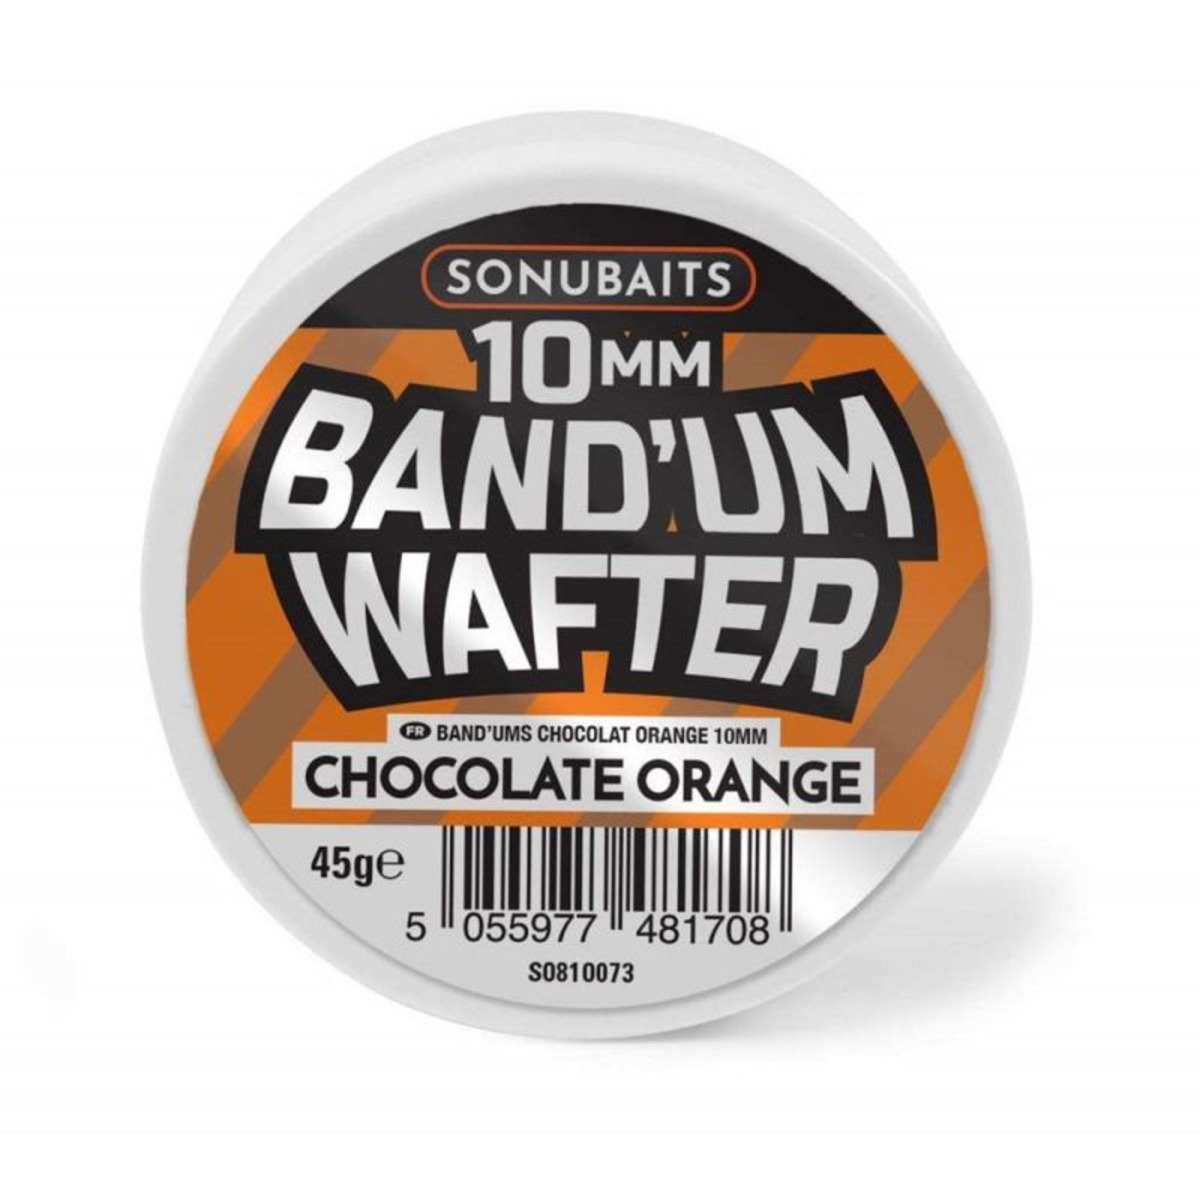 Sonubaits Band’um Wafters - 10 mm - Chocolate Orange